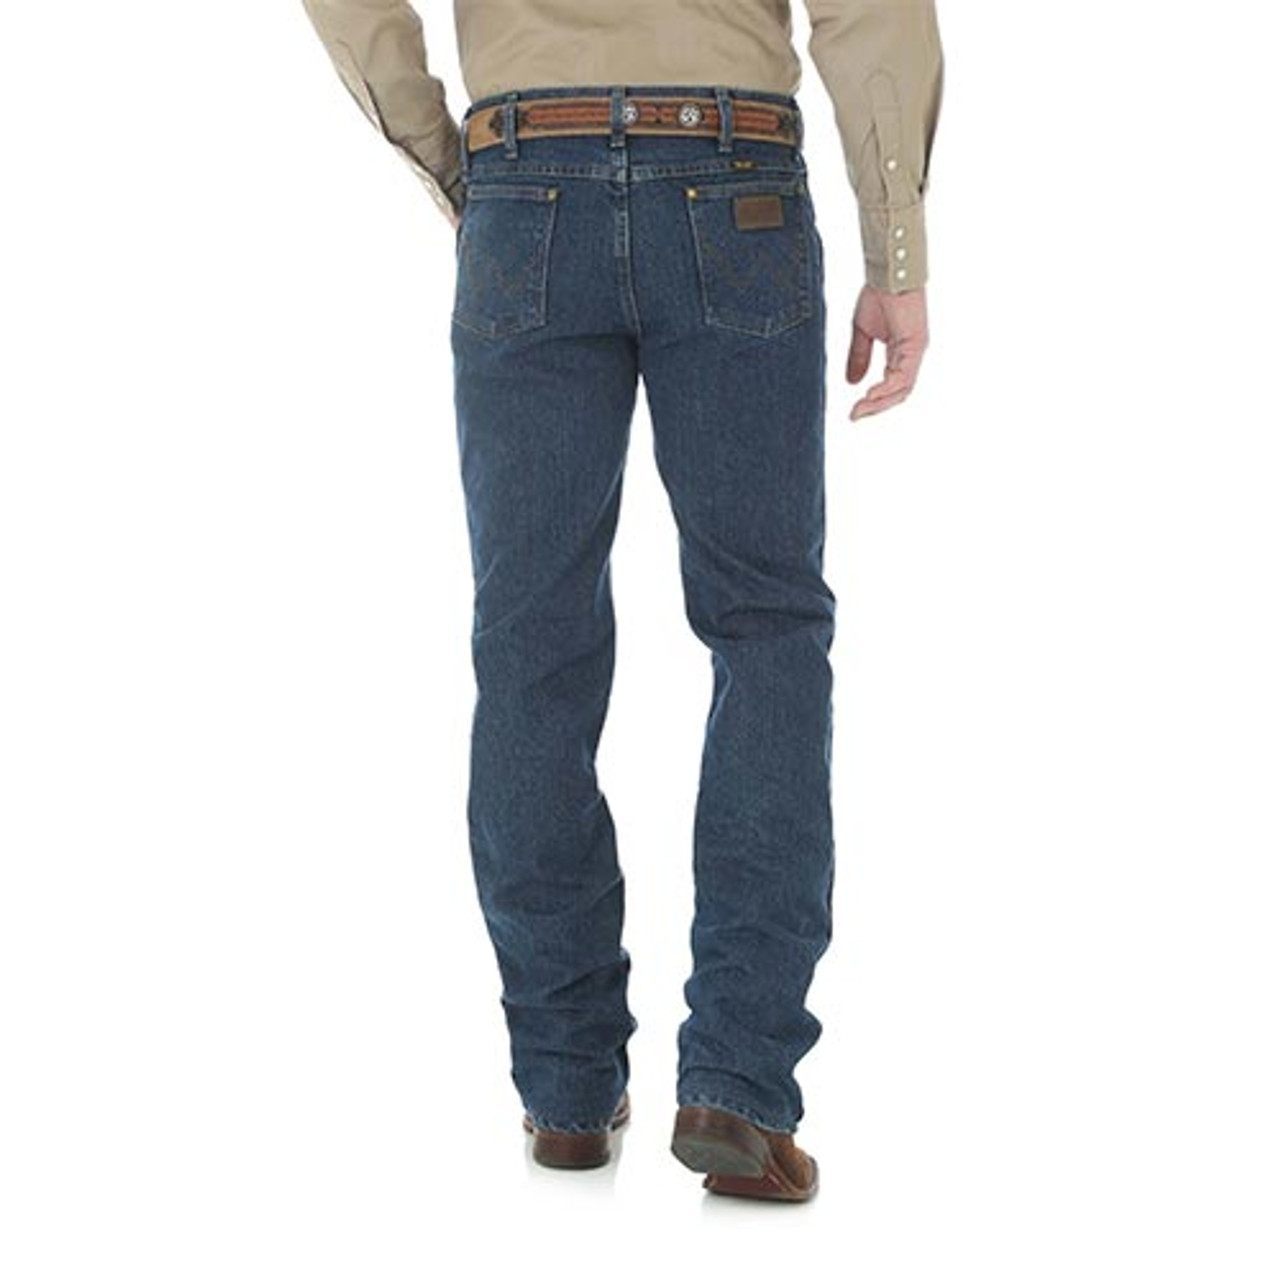 wrangler advanced comfort jeans